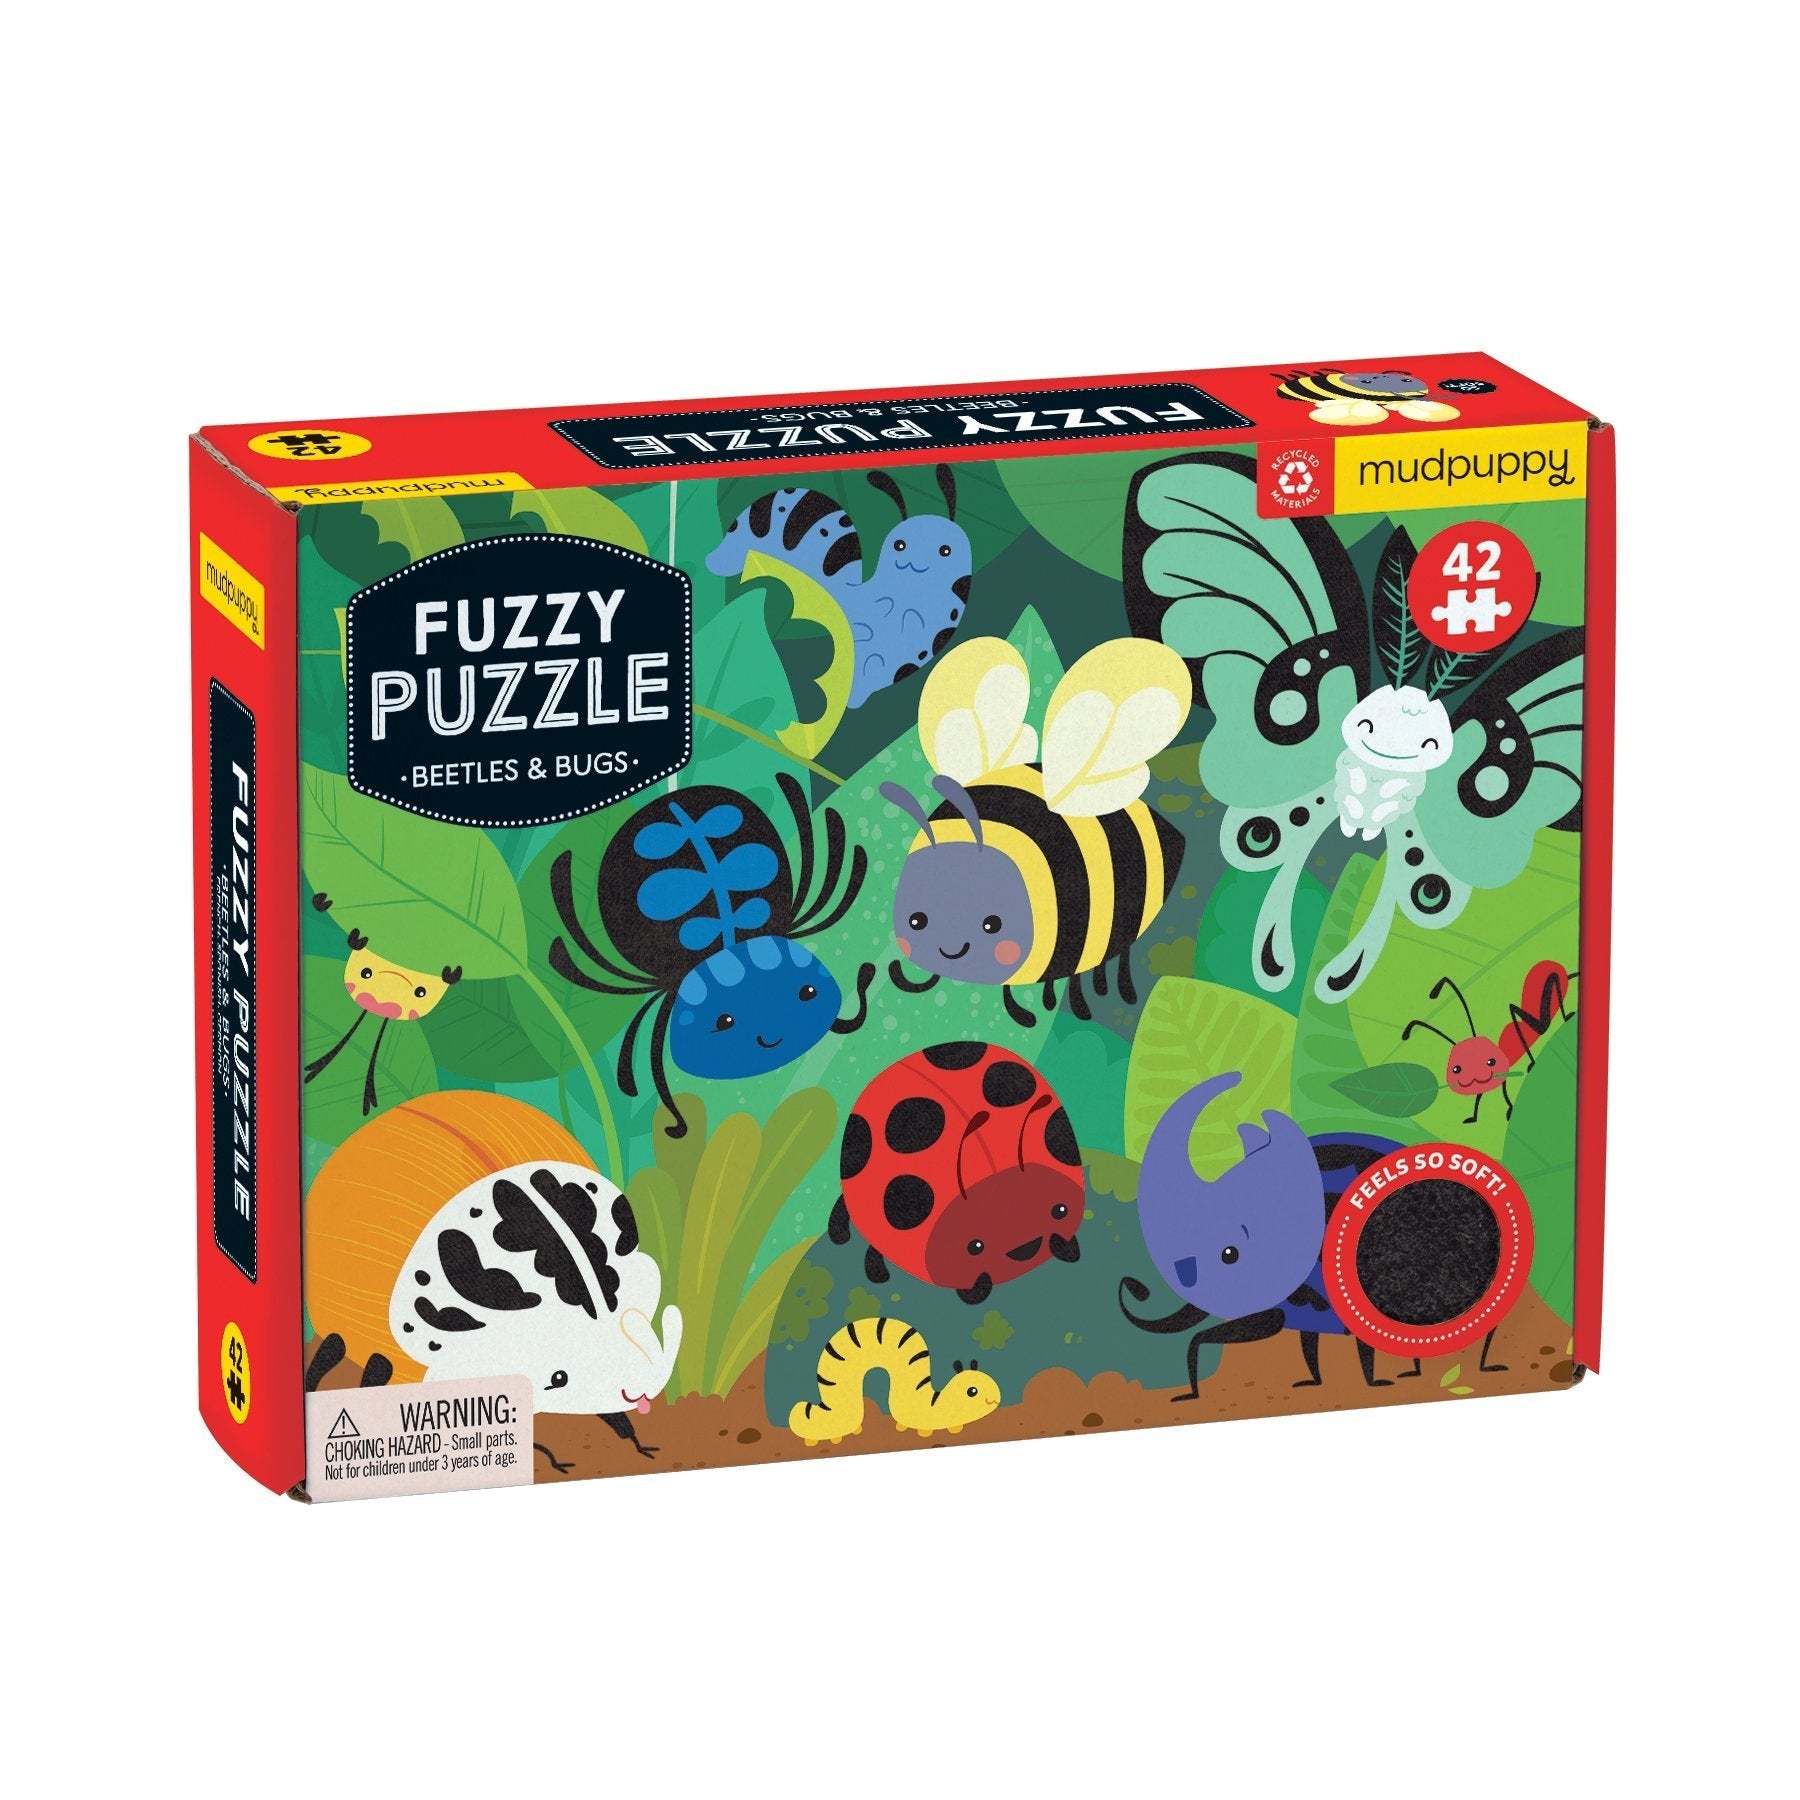 Beetles & Bugs Fuzzy 42 Piece Mudpuppy Puzzle